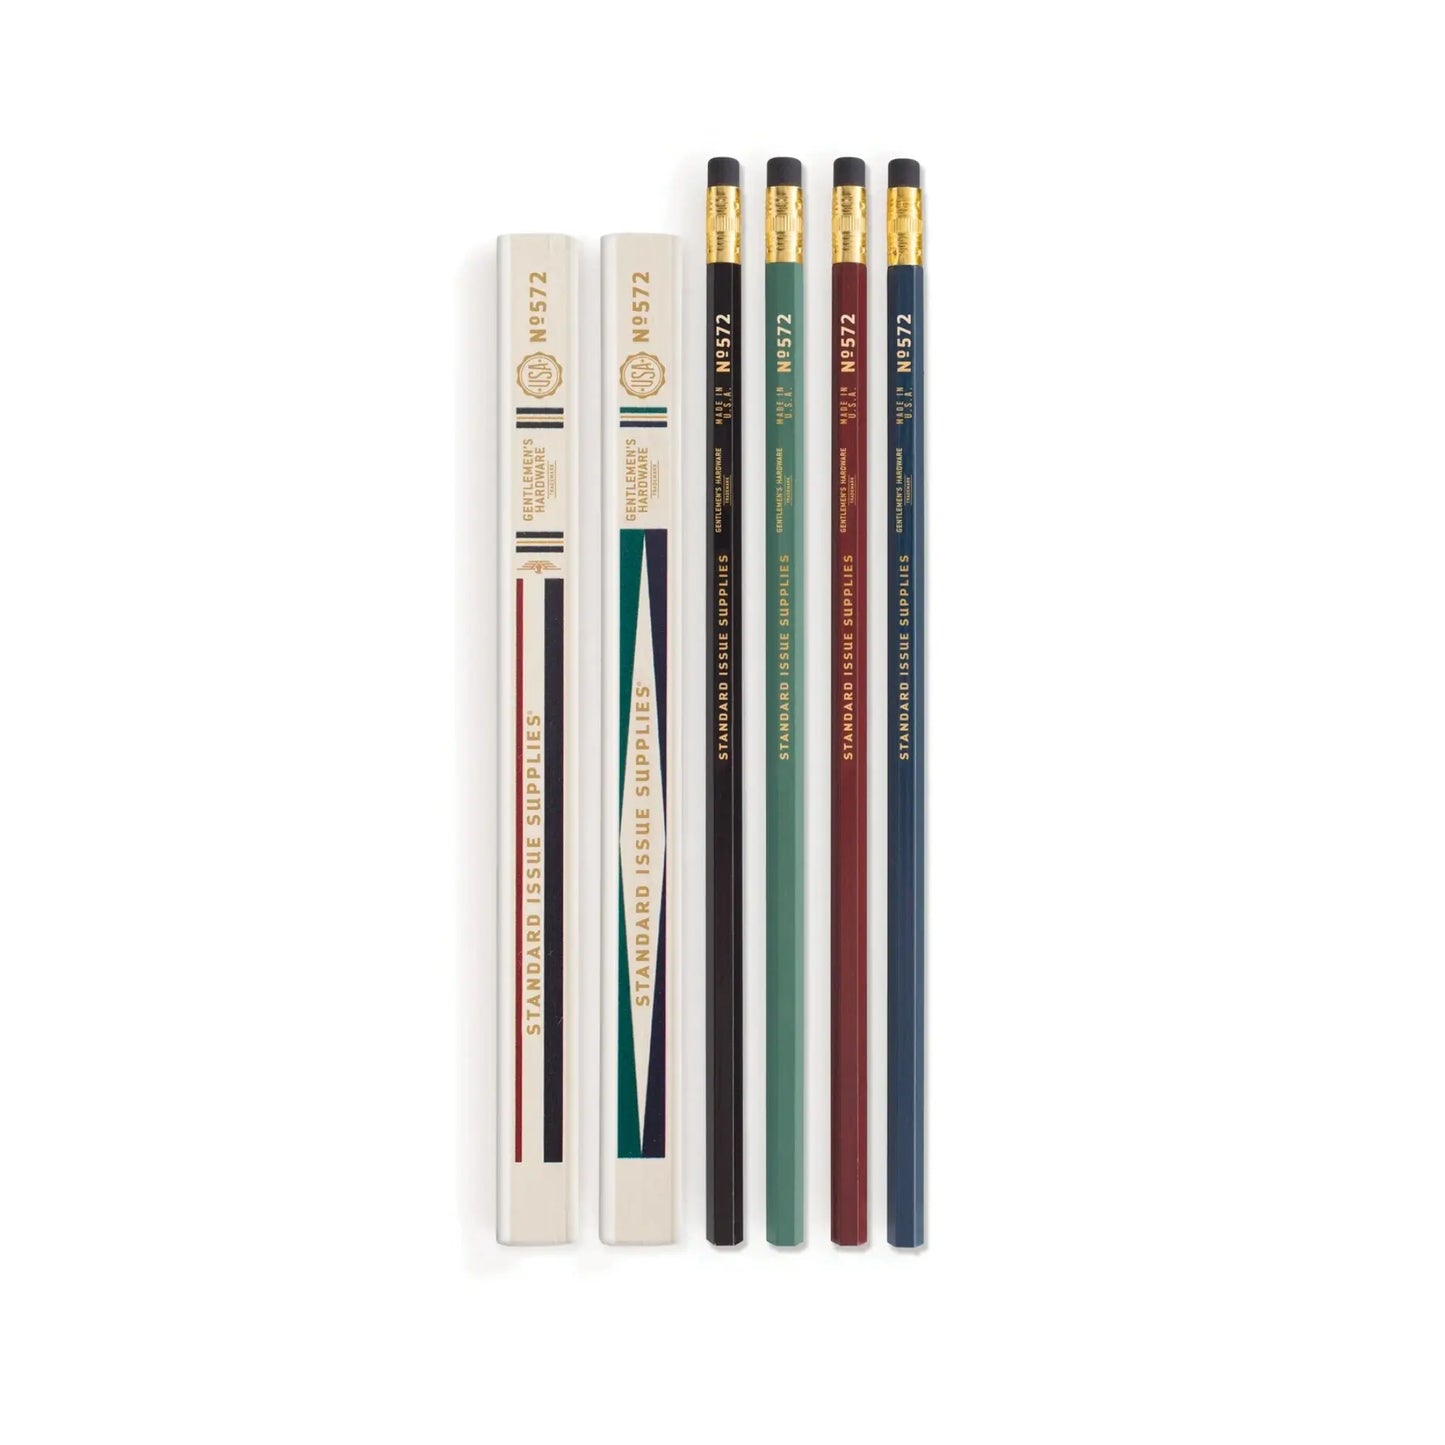 Buy Gentlemen's Hardware Standard Issue Pencil Set | Household Utensilss at Woven Durham